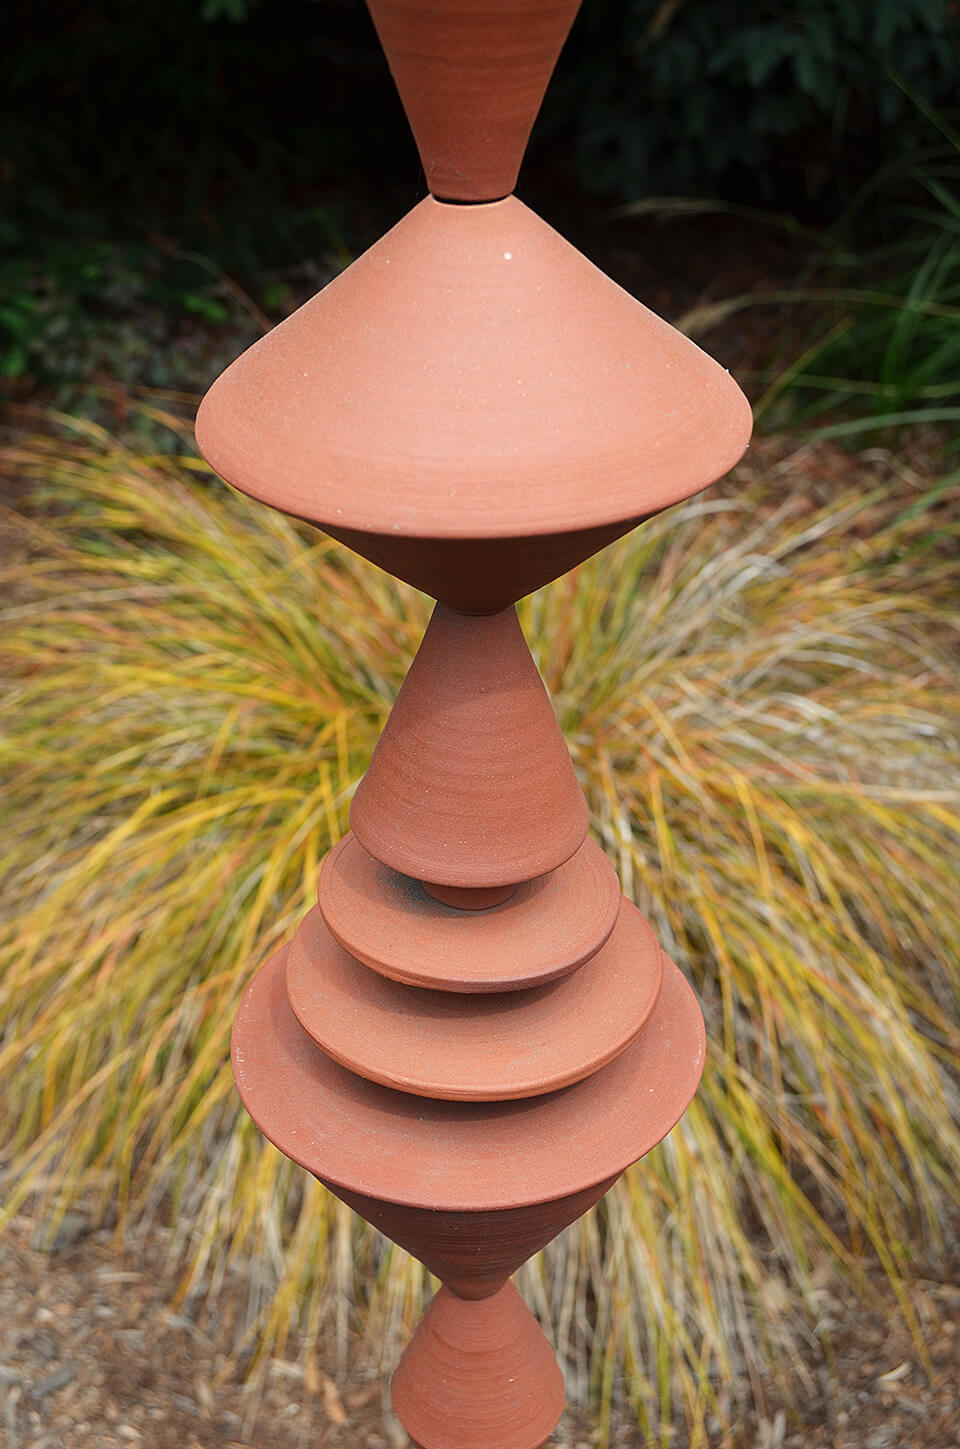 Ceramic Garden Cones by Zuzana Licko 3